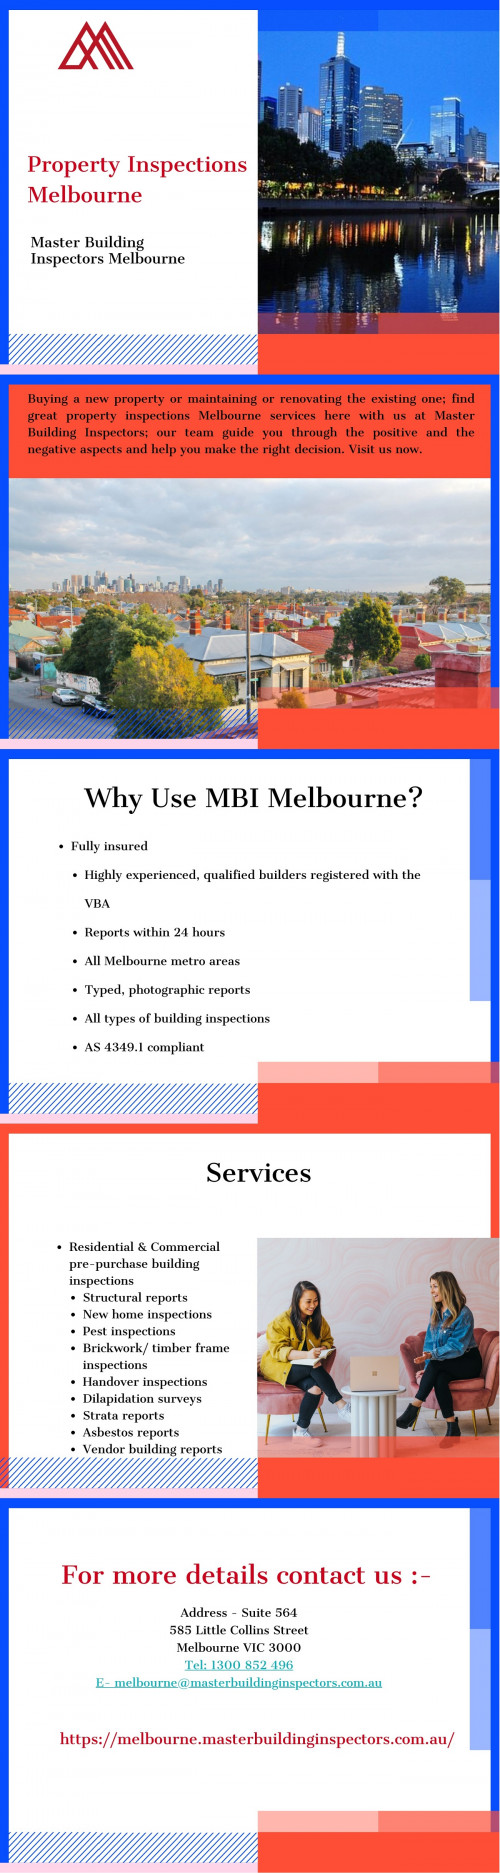 Property-Inspections-Melbourne.jpg